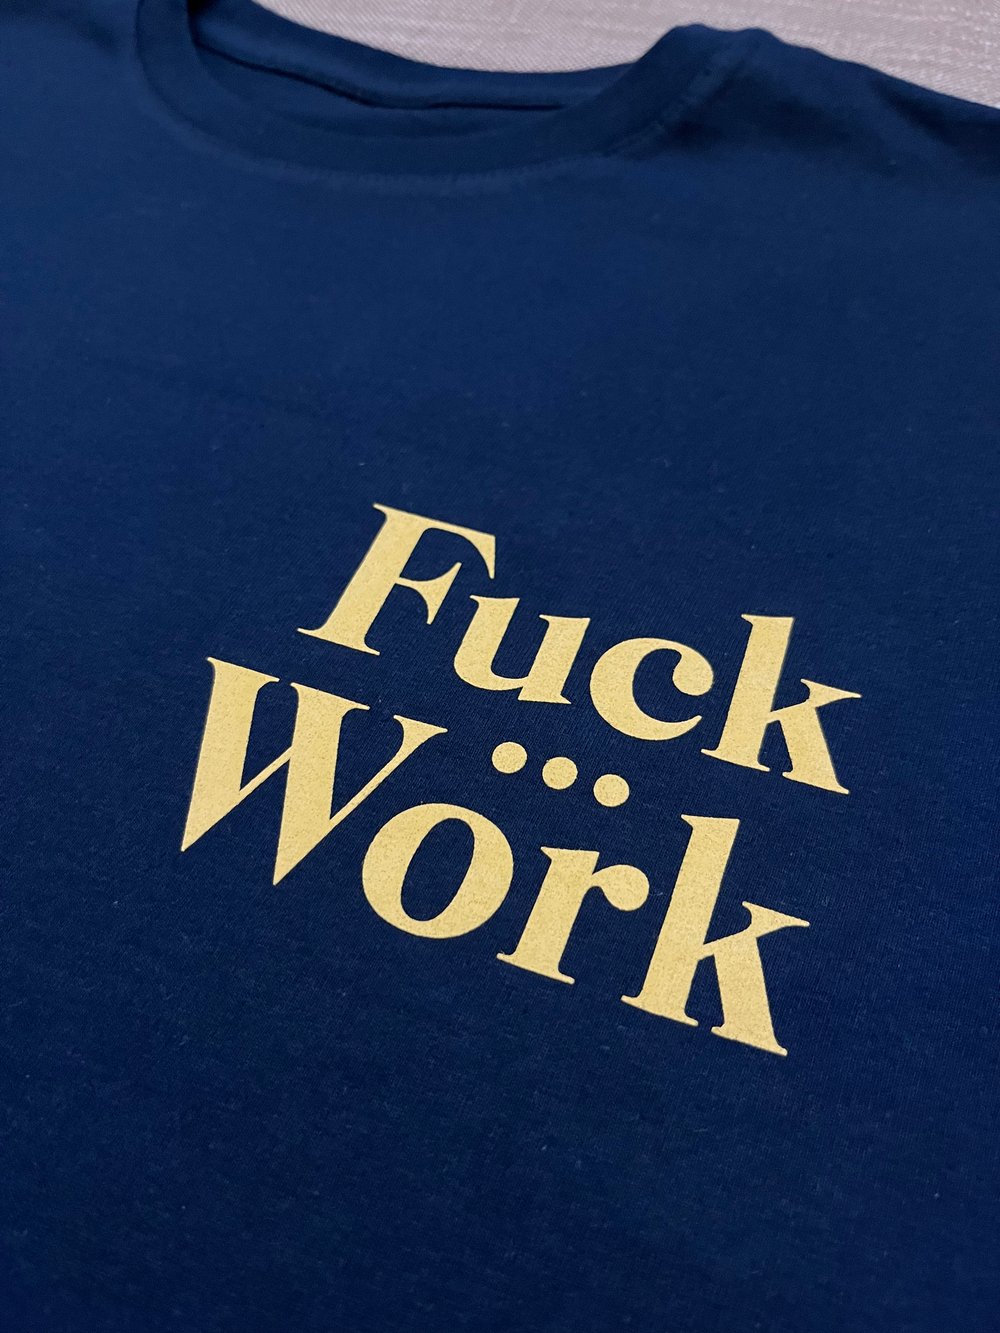 FUCK WORK tee